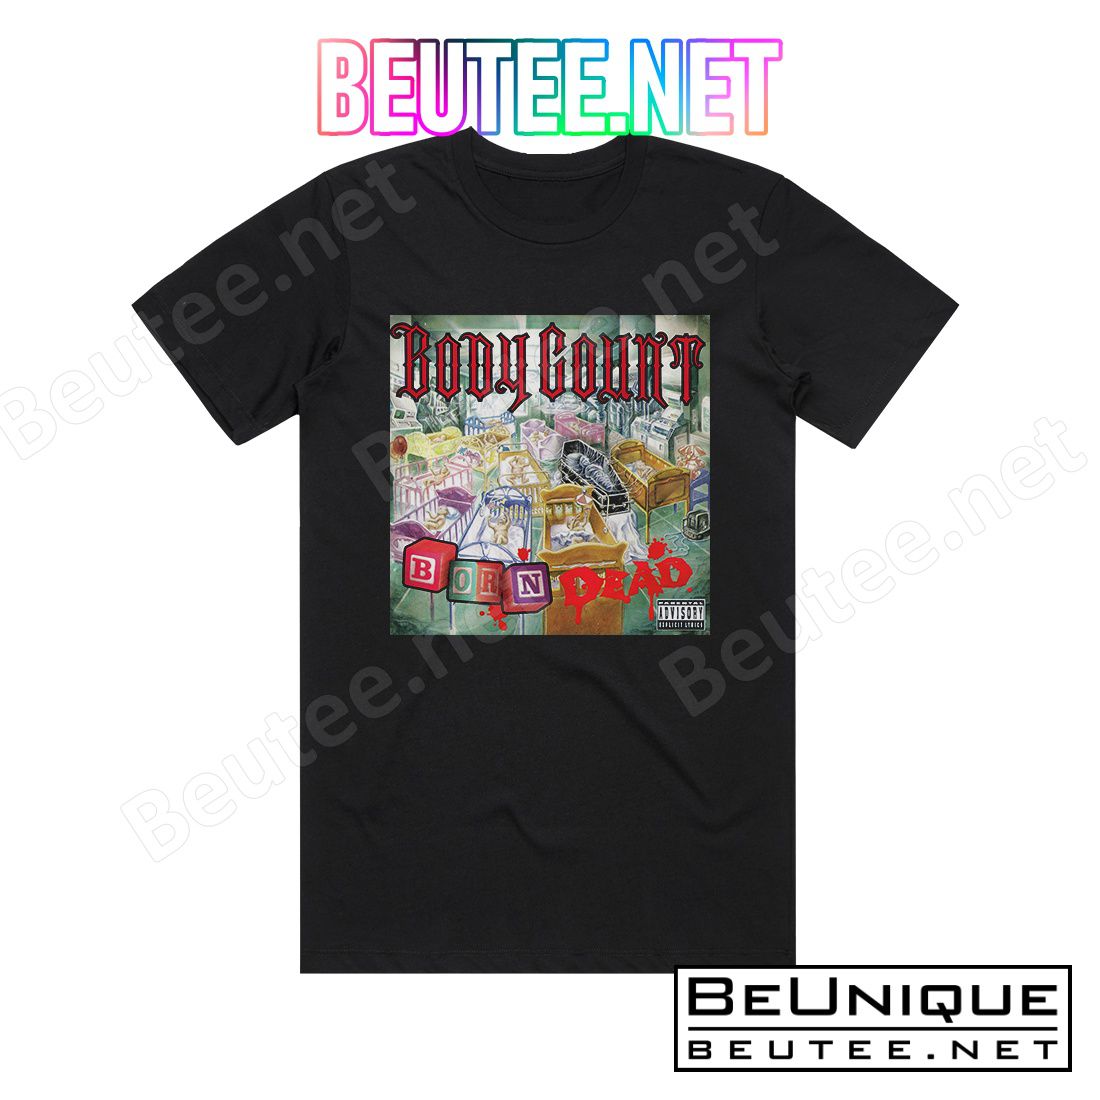 Body Count Born Dead 1 Album Cover T-Shirt